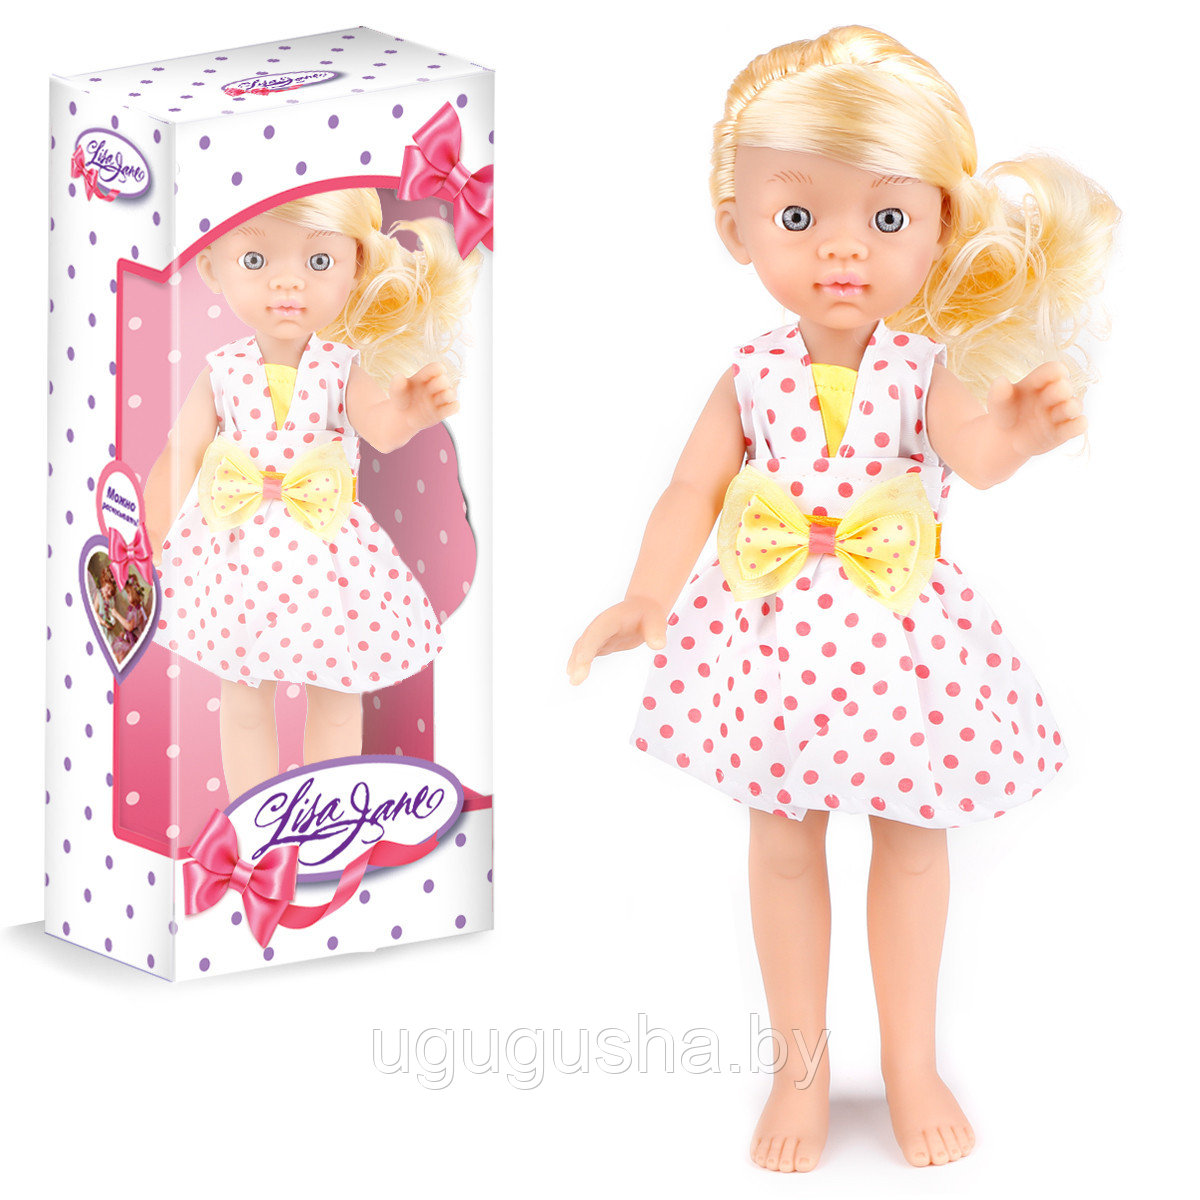 Кукла виниловая Lisa Jane 33 см